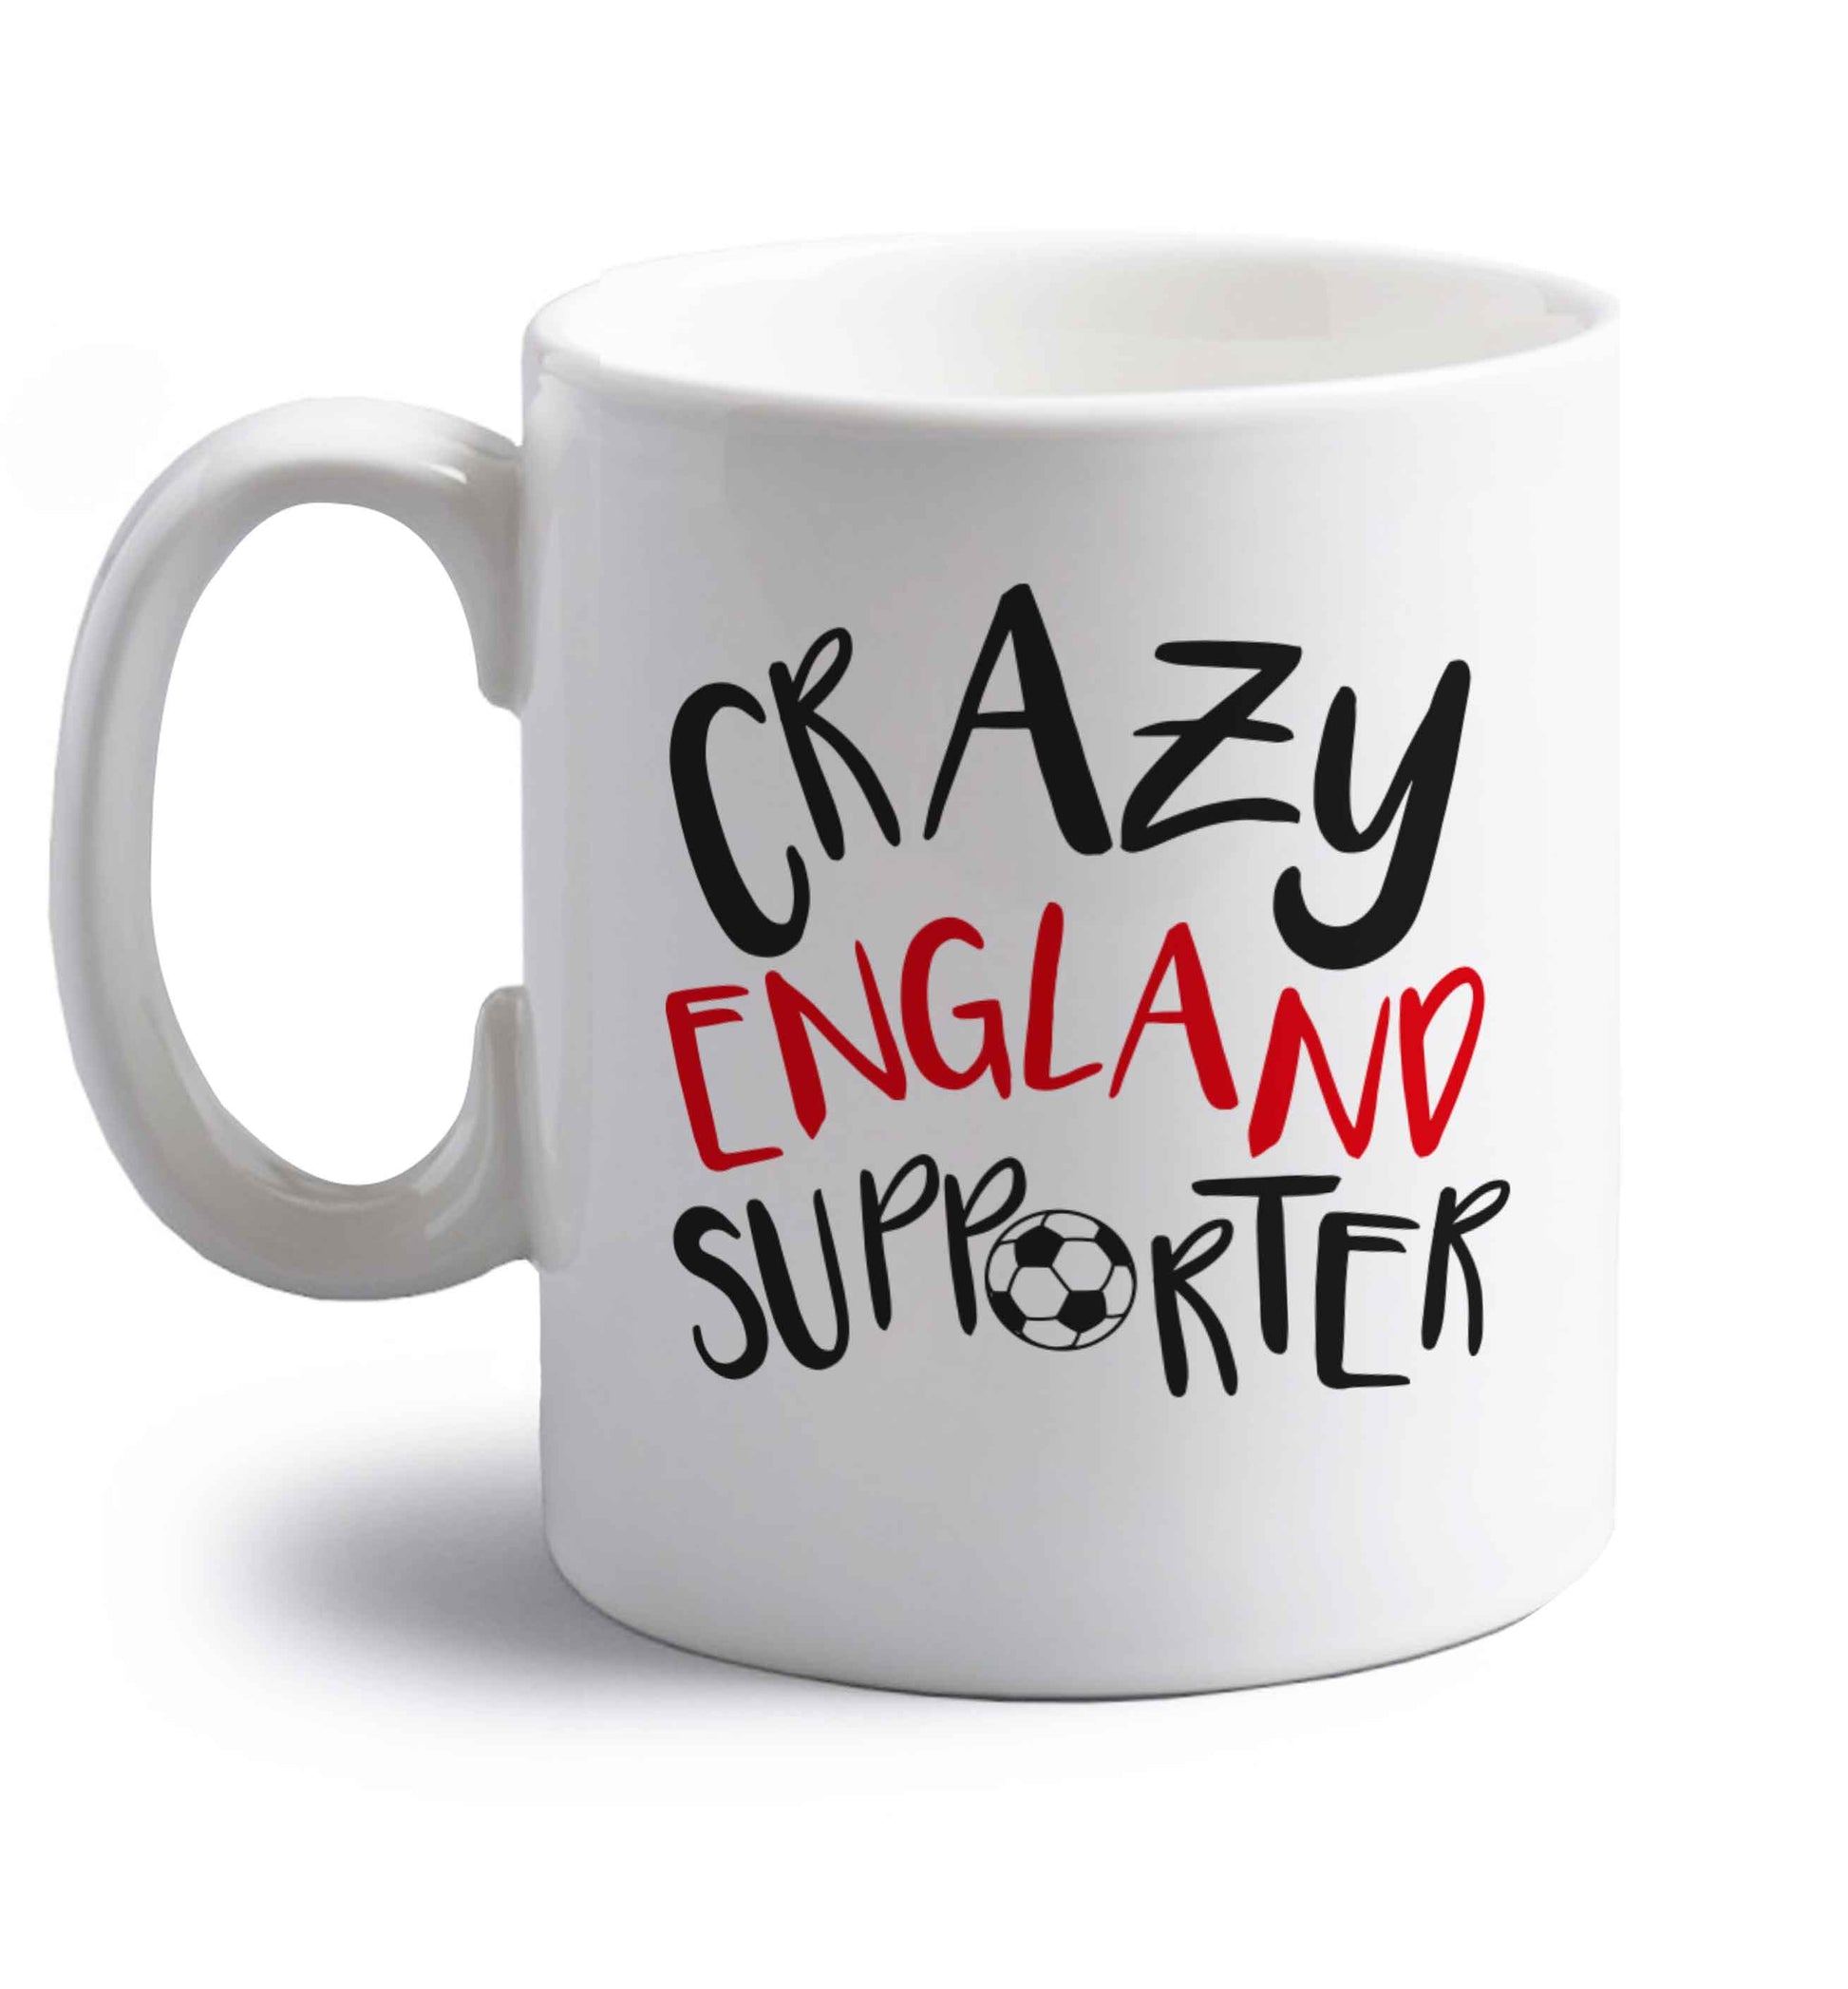 Crazy England supporter right handed white ceramic mug 